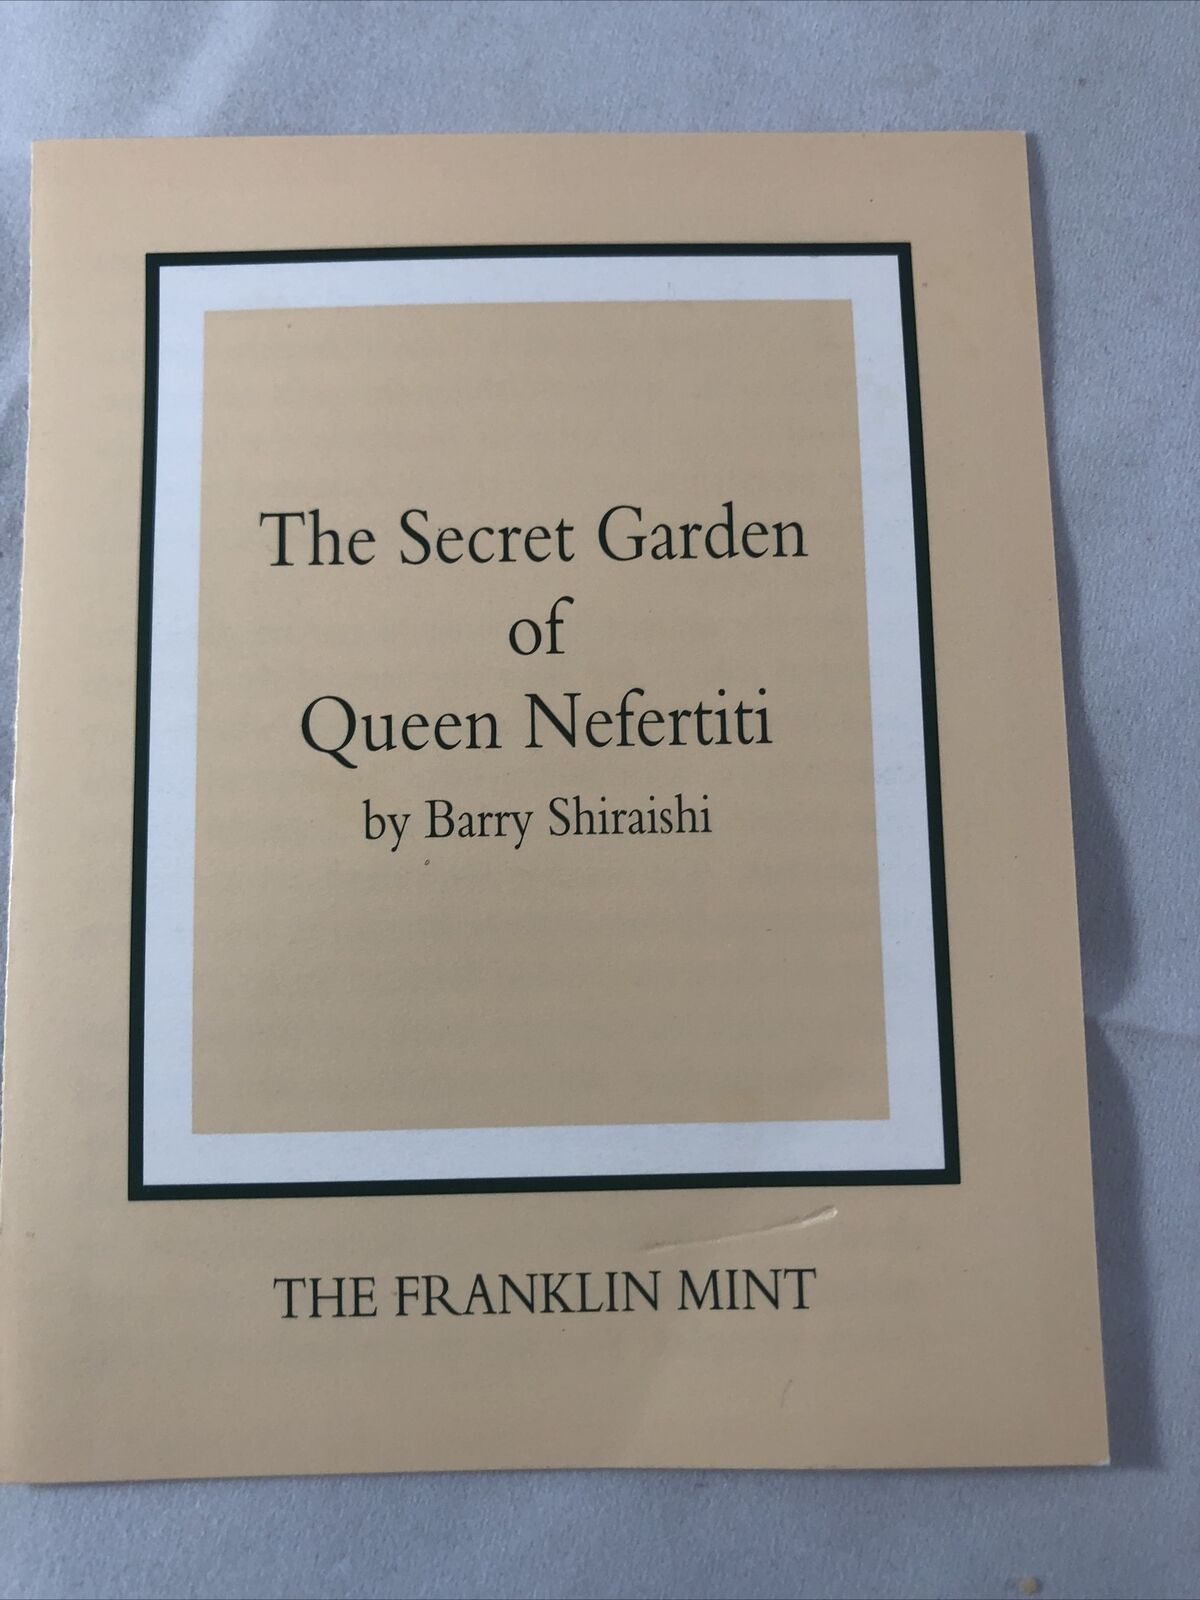 Coa Certificate Authenticity Only Secret Garden Queen Nefertiti Barry Shiraishi